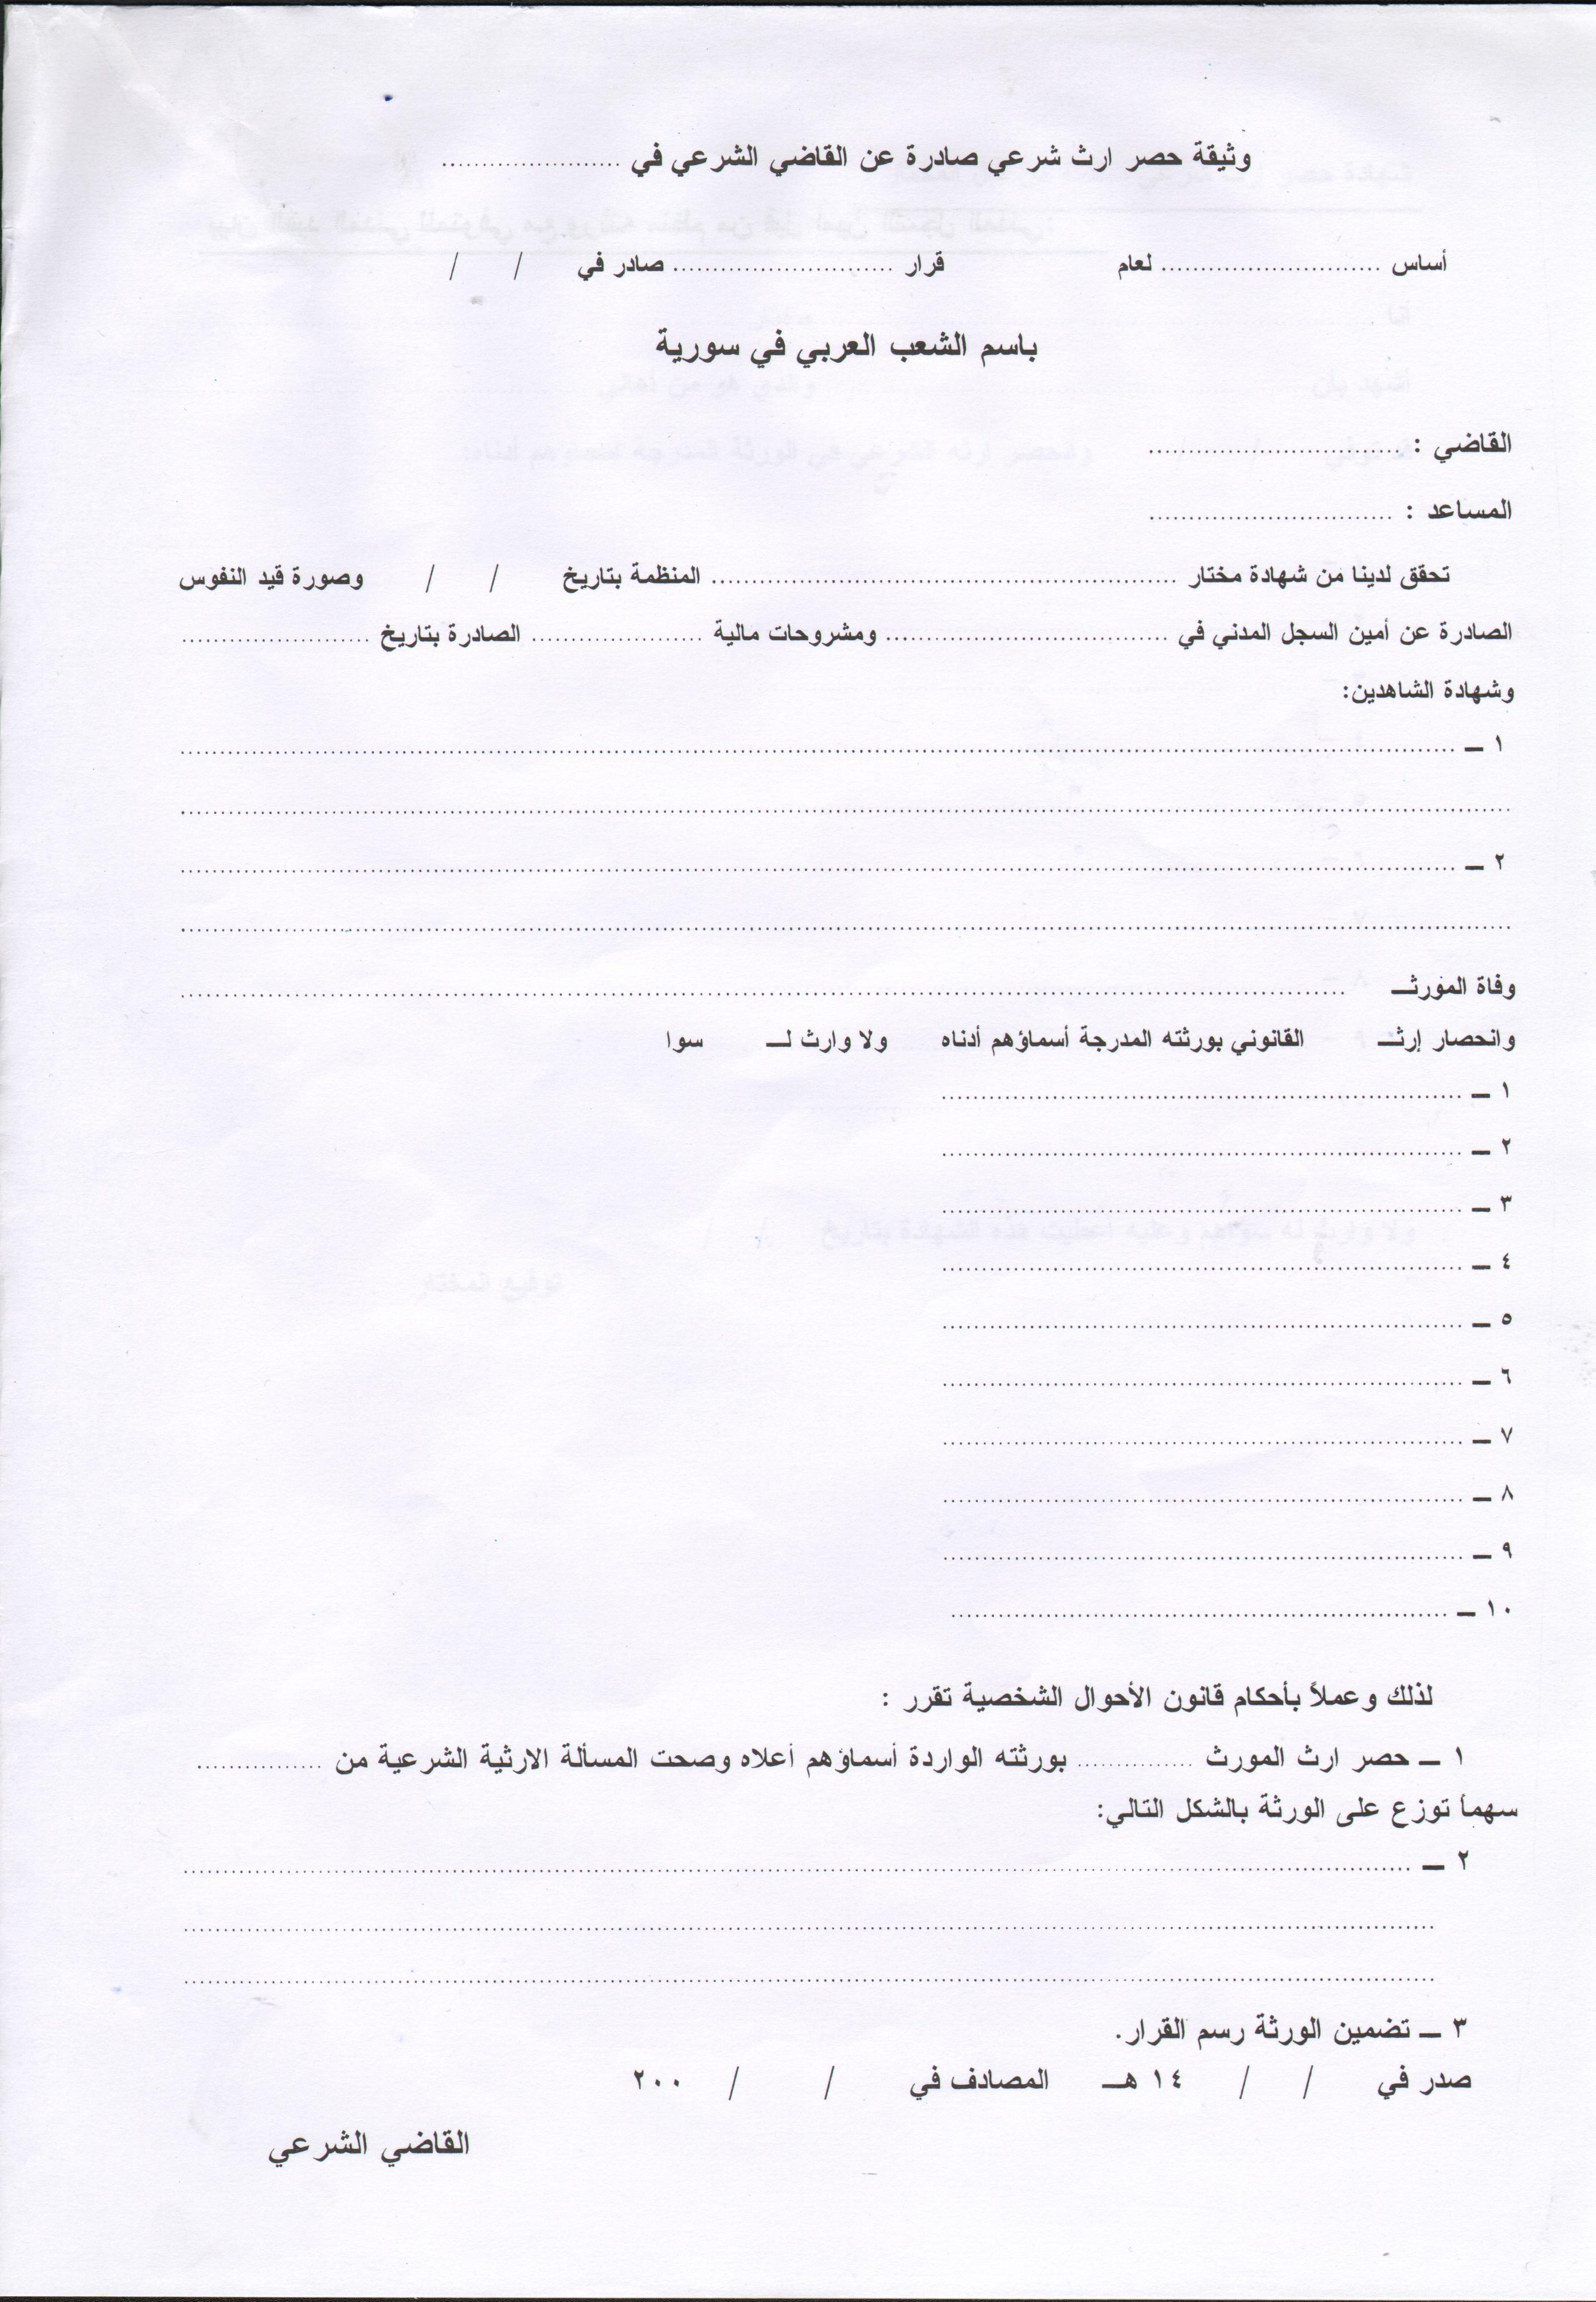 نموذج عقد زواج عرفي مصري pdf.